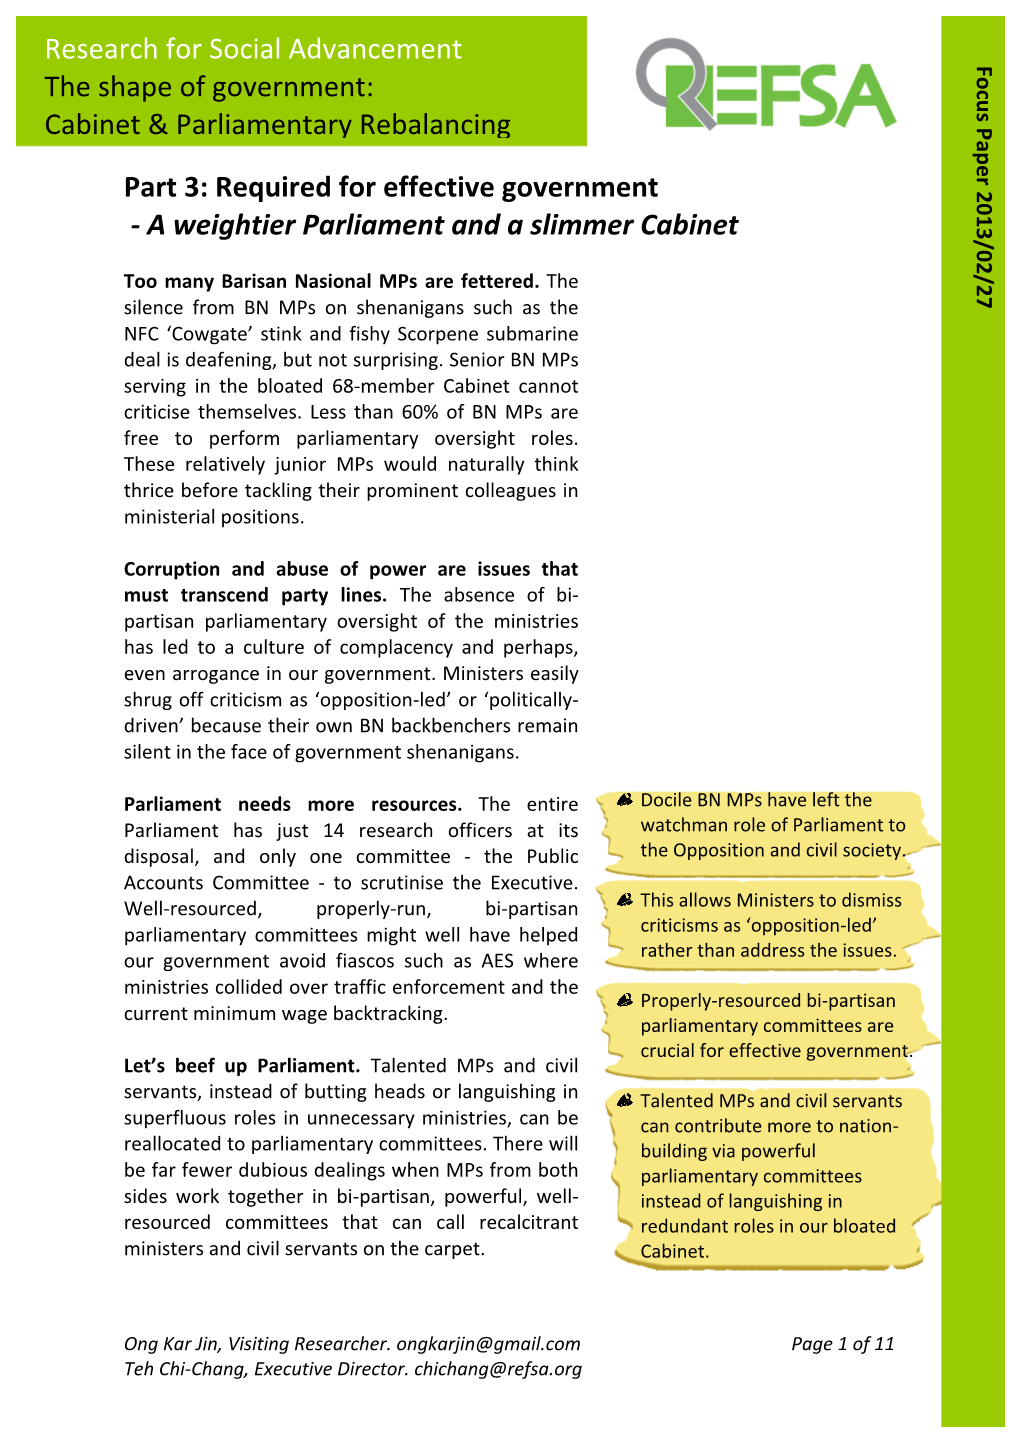 Cabinet & Parliamentary